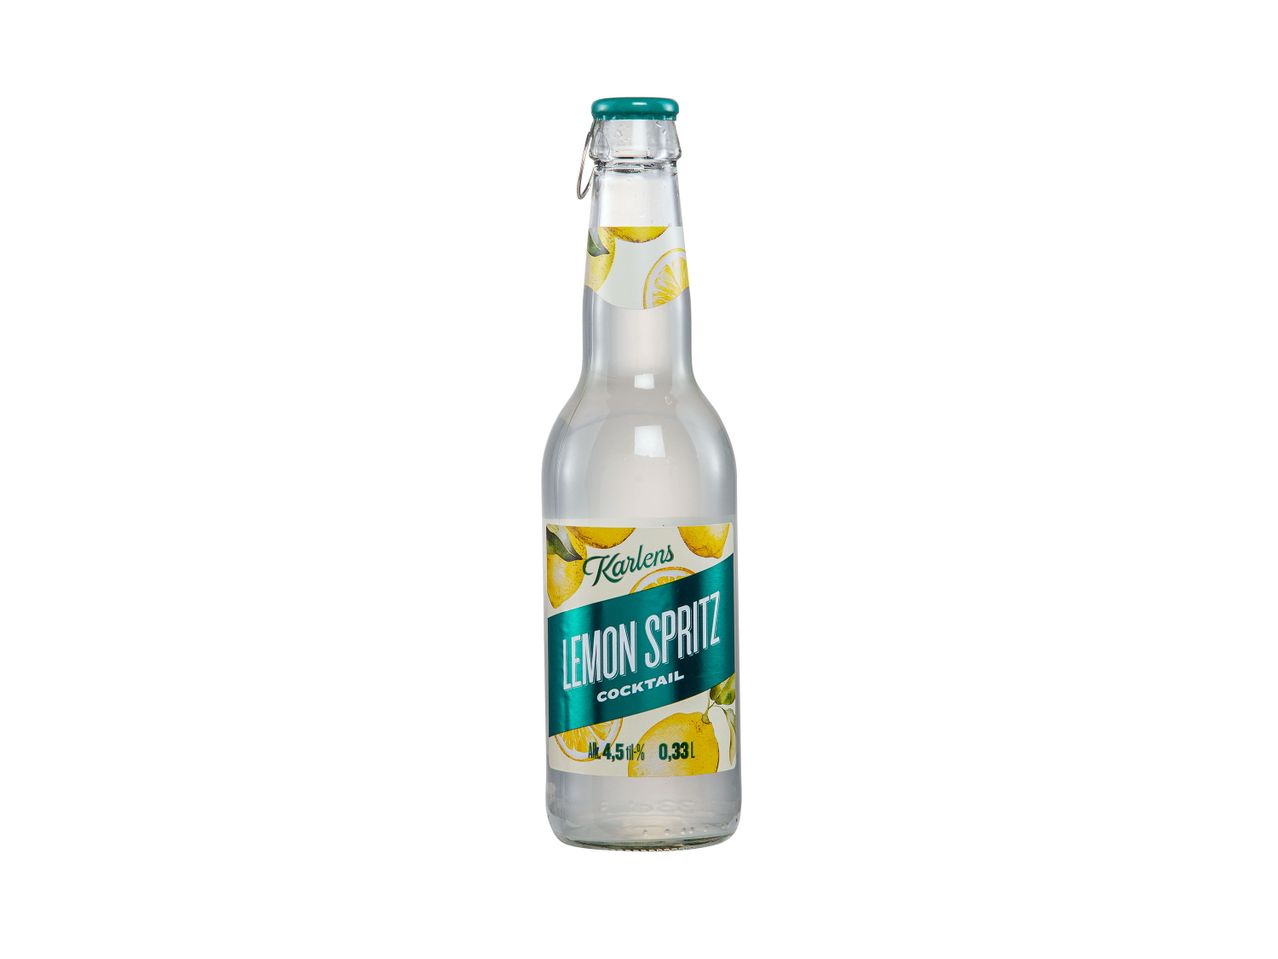 Mene koko näytön tilaan: Karlens Lemon Spritz alk. 4,5 til-% - Kuva 1